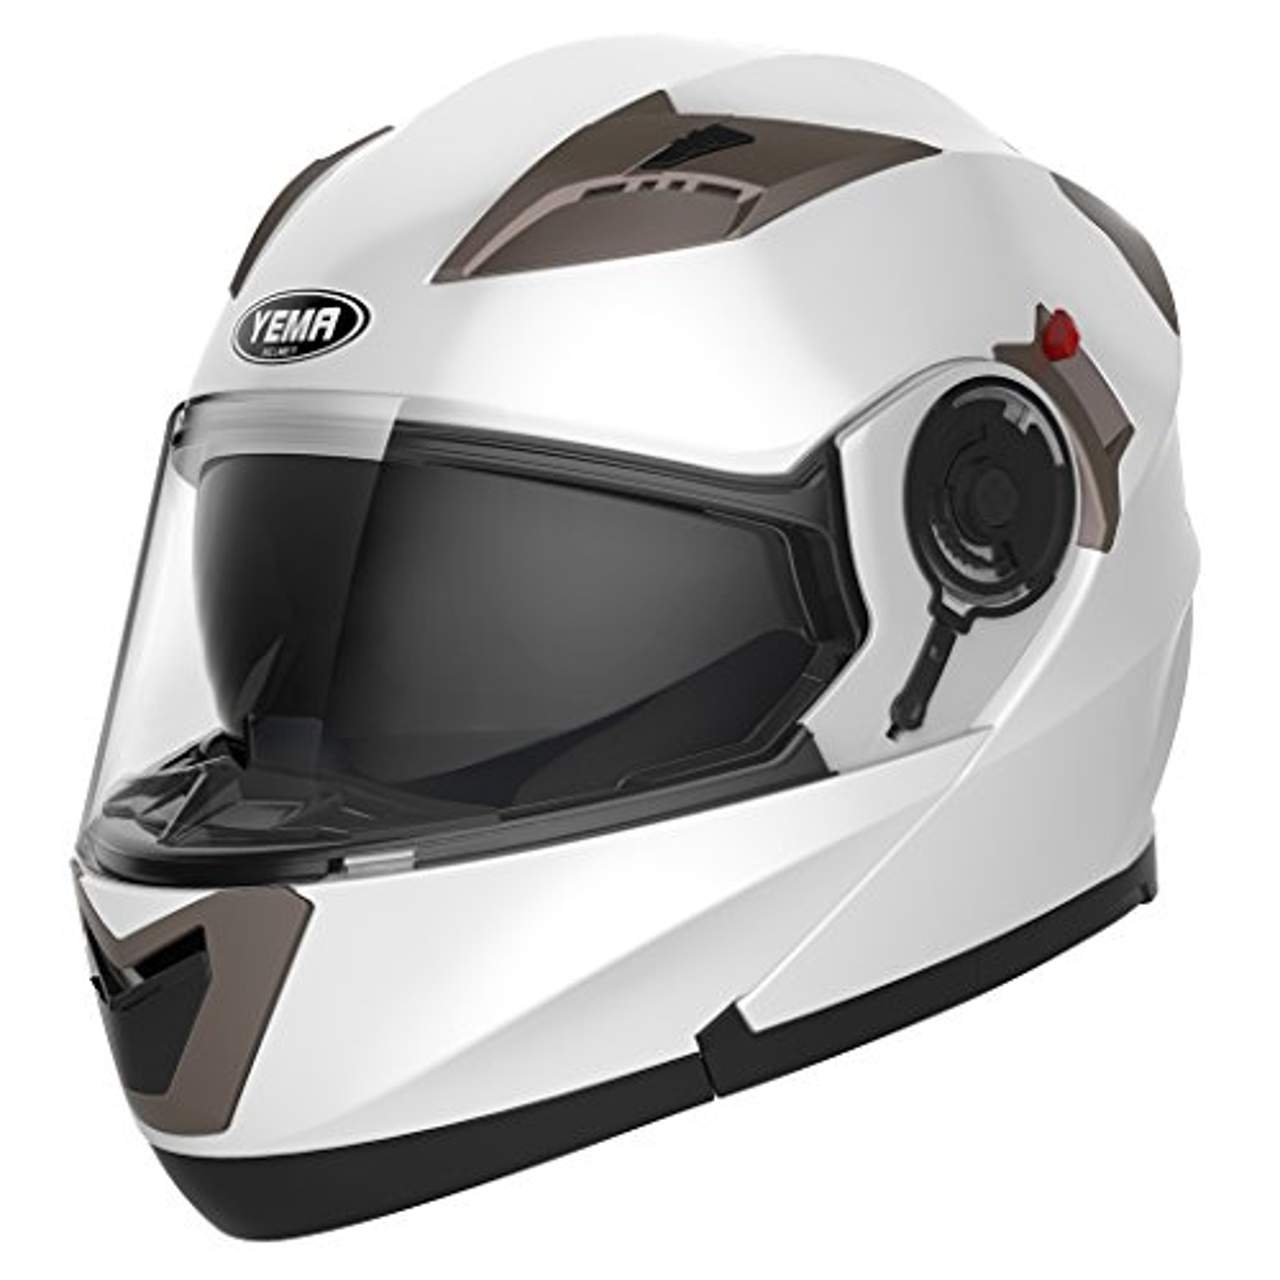 Motorradhelm Klapphelm Integralhelm Fullface Helm